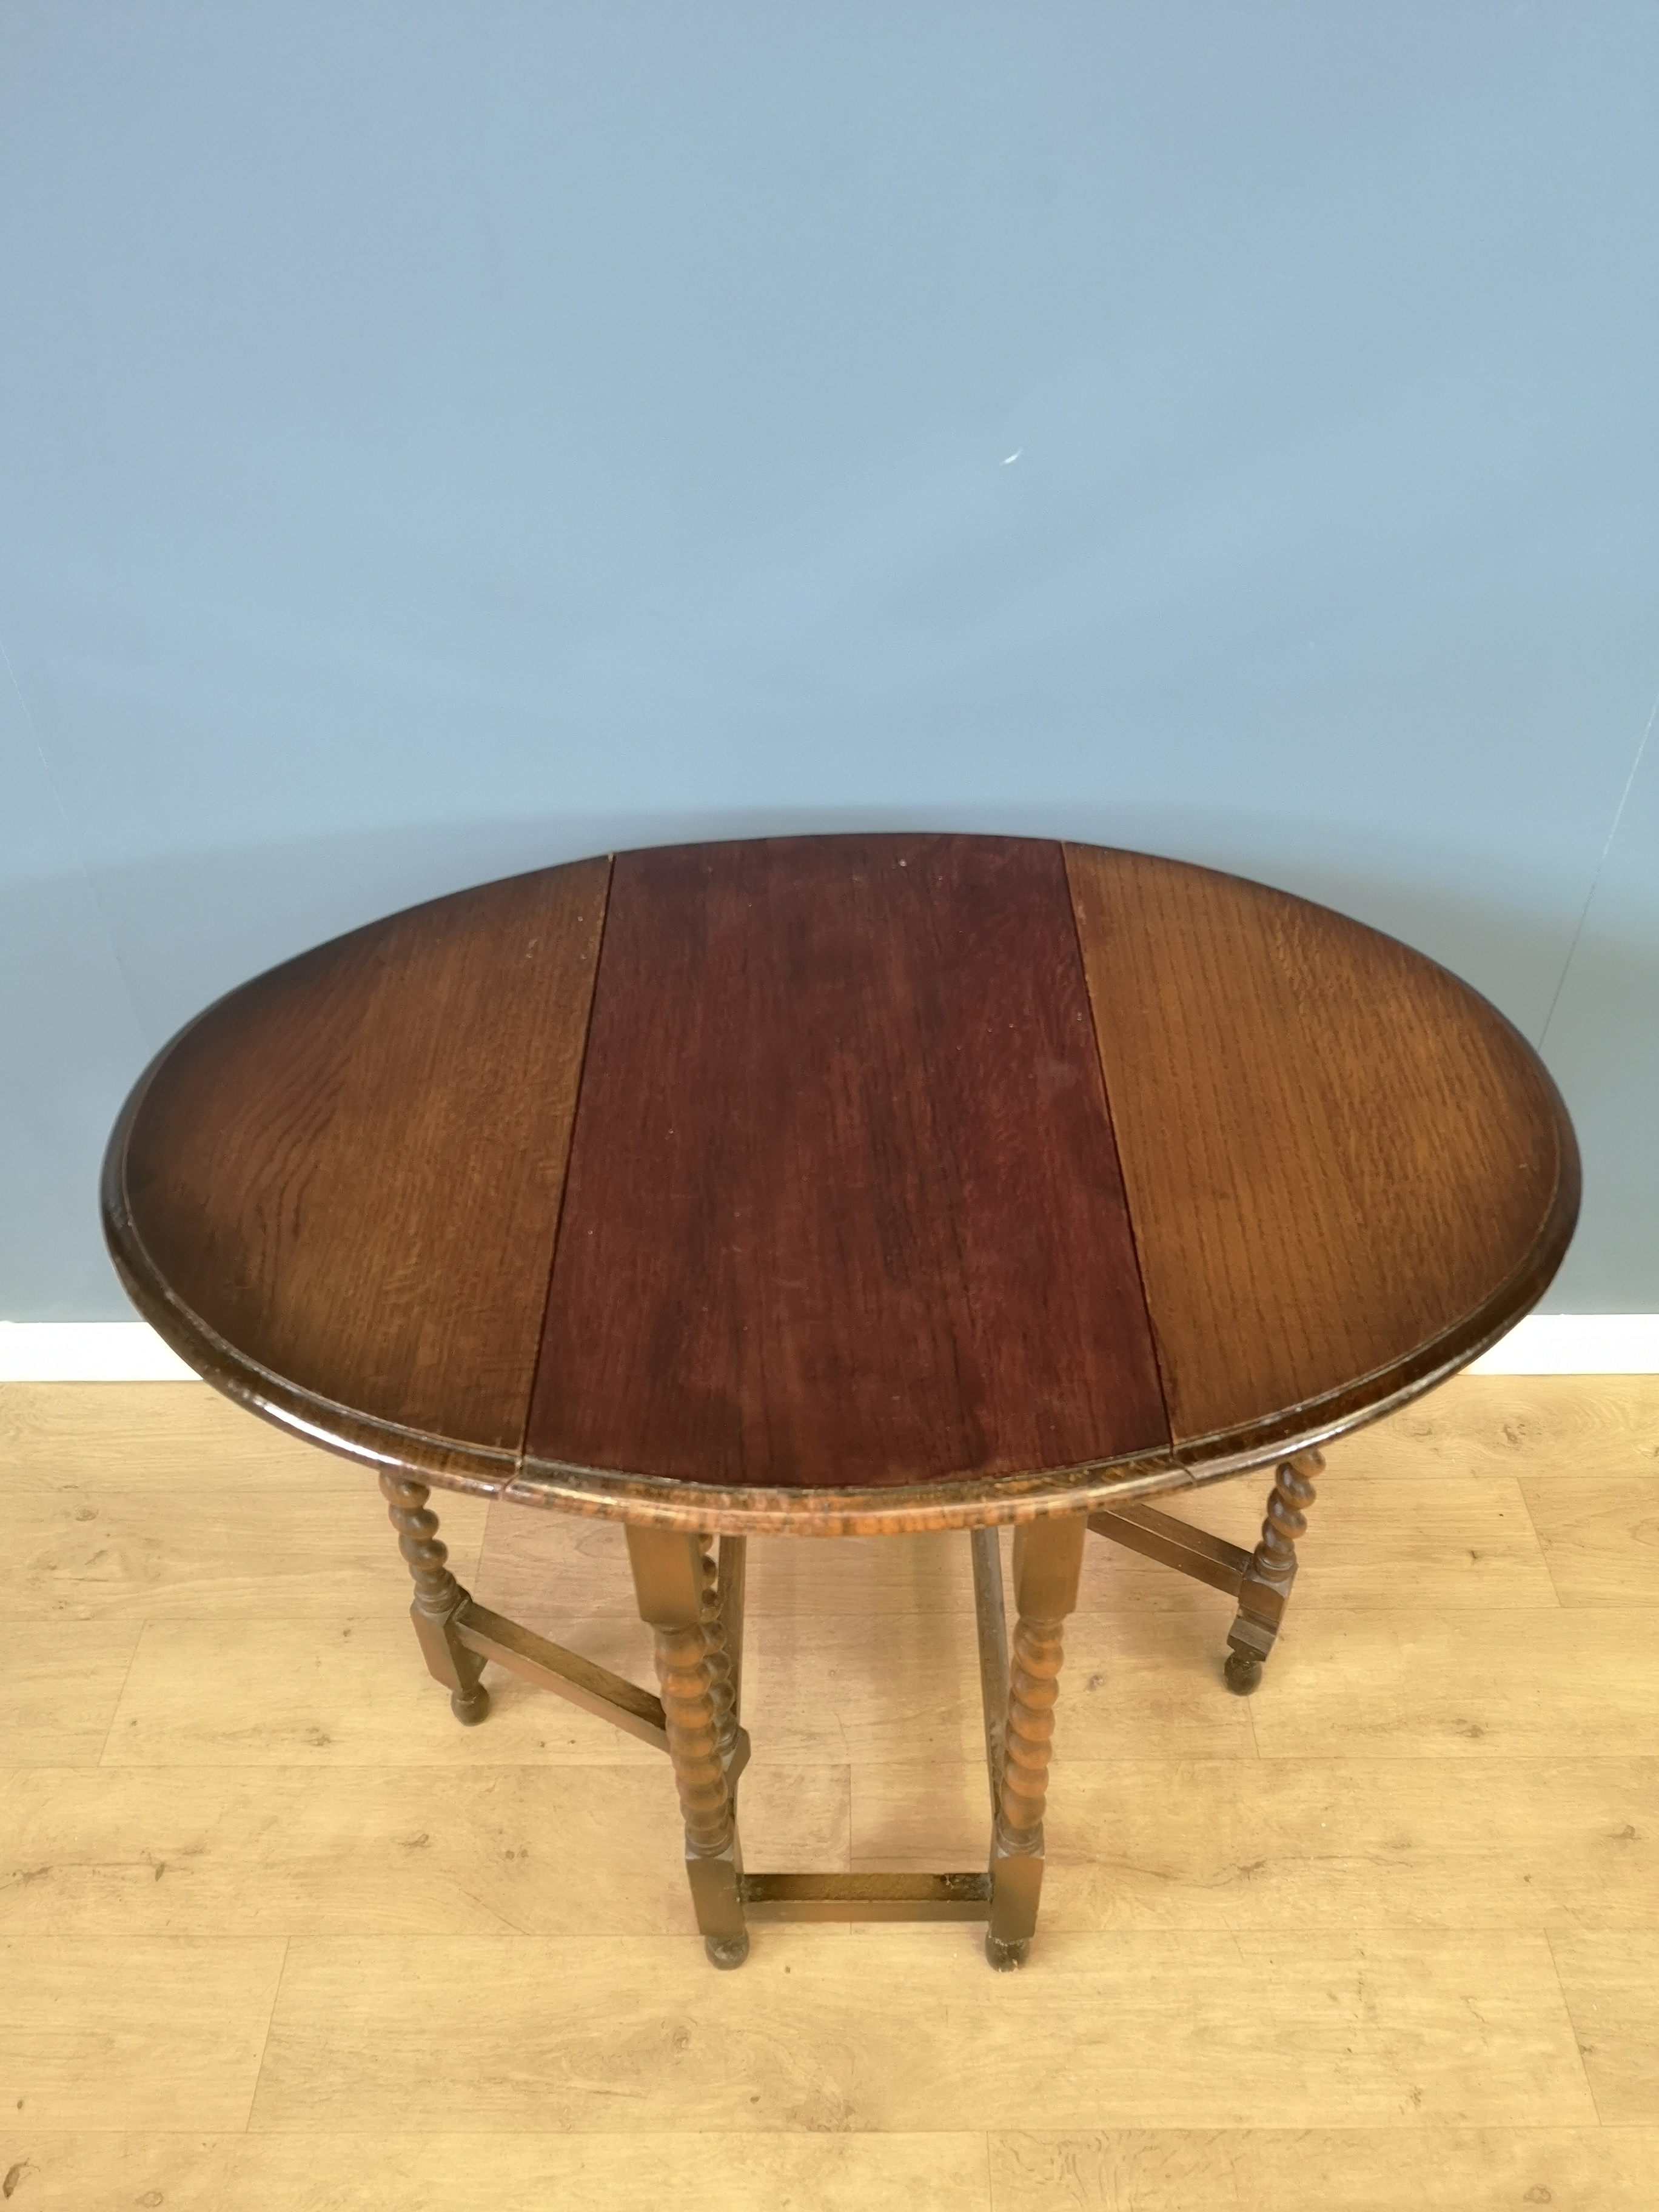 Mahogany dropside table - Image 2 of 5